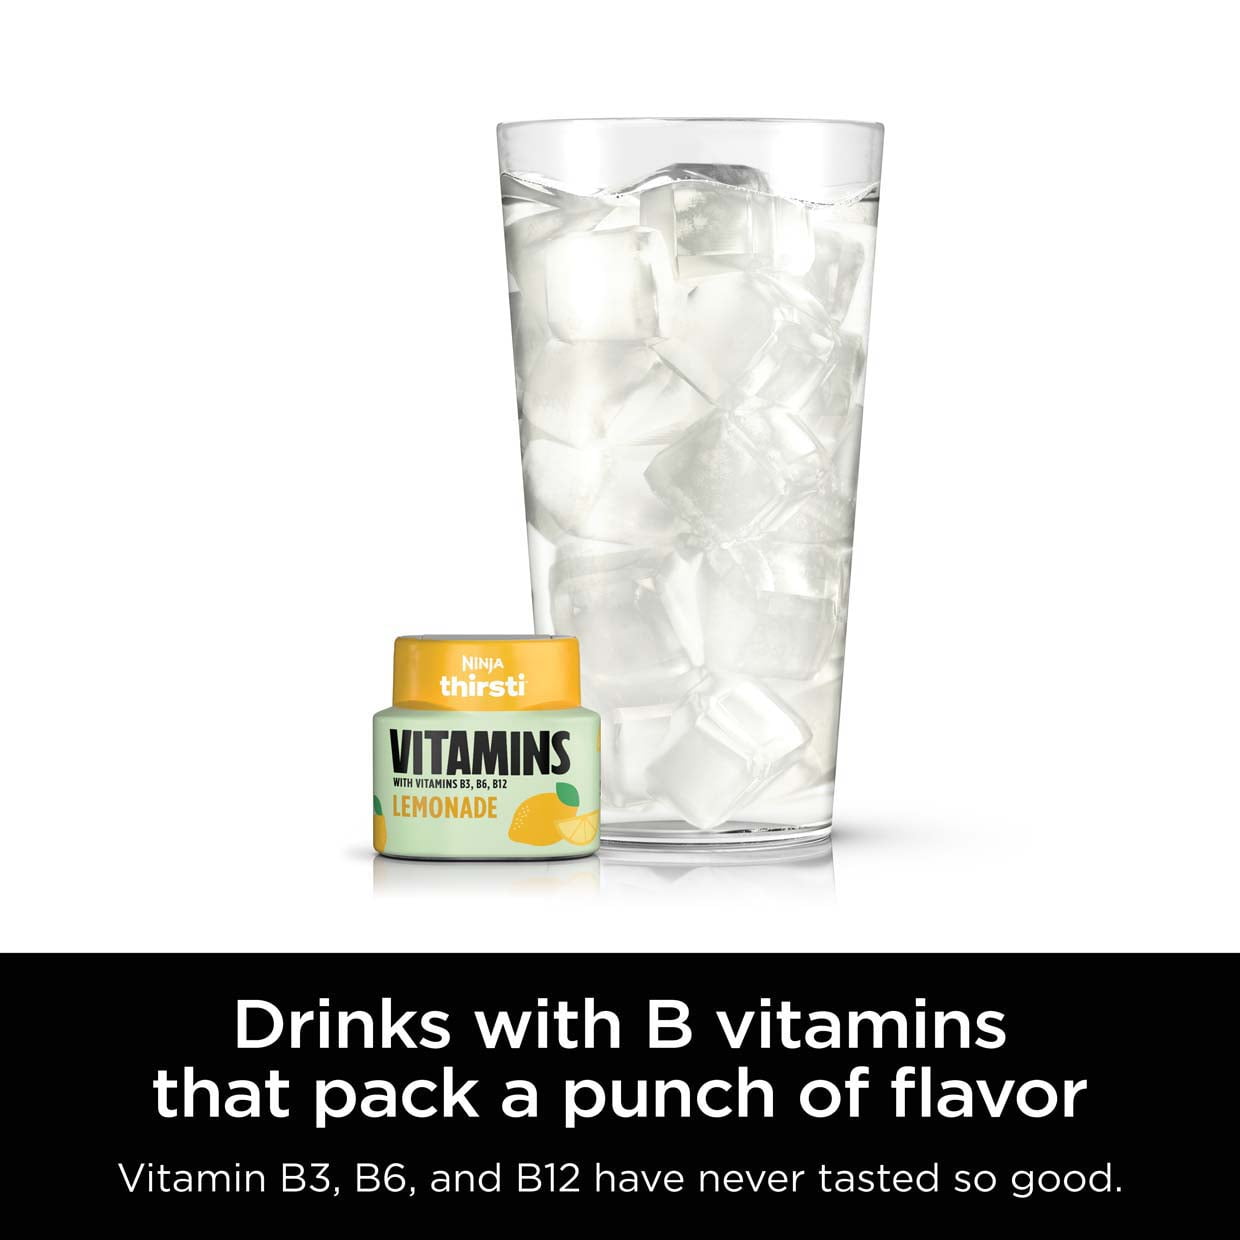 Ninja Thirsti VITAMINS Lemonade Flavored Water Drops, WCFLMND6 